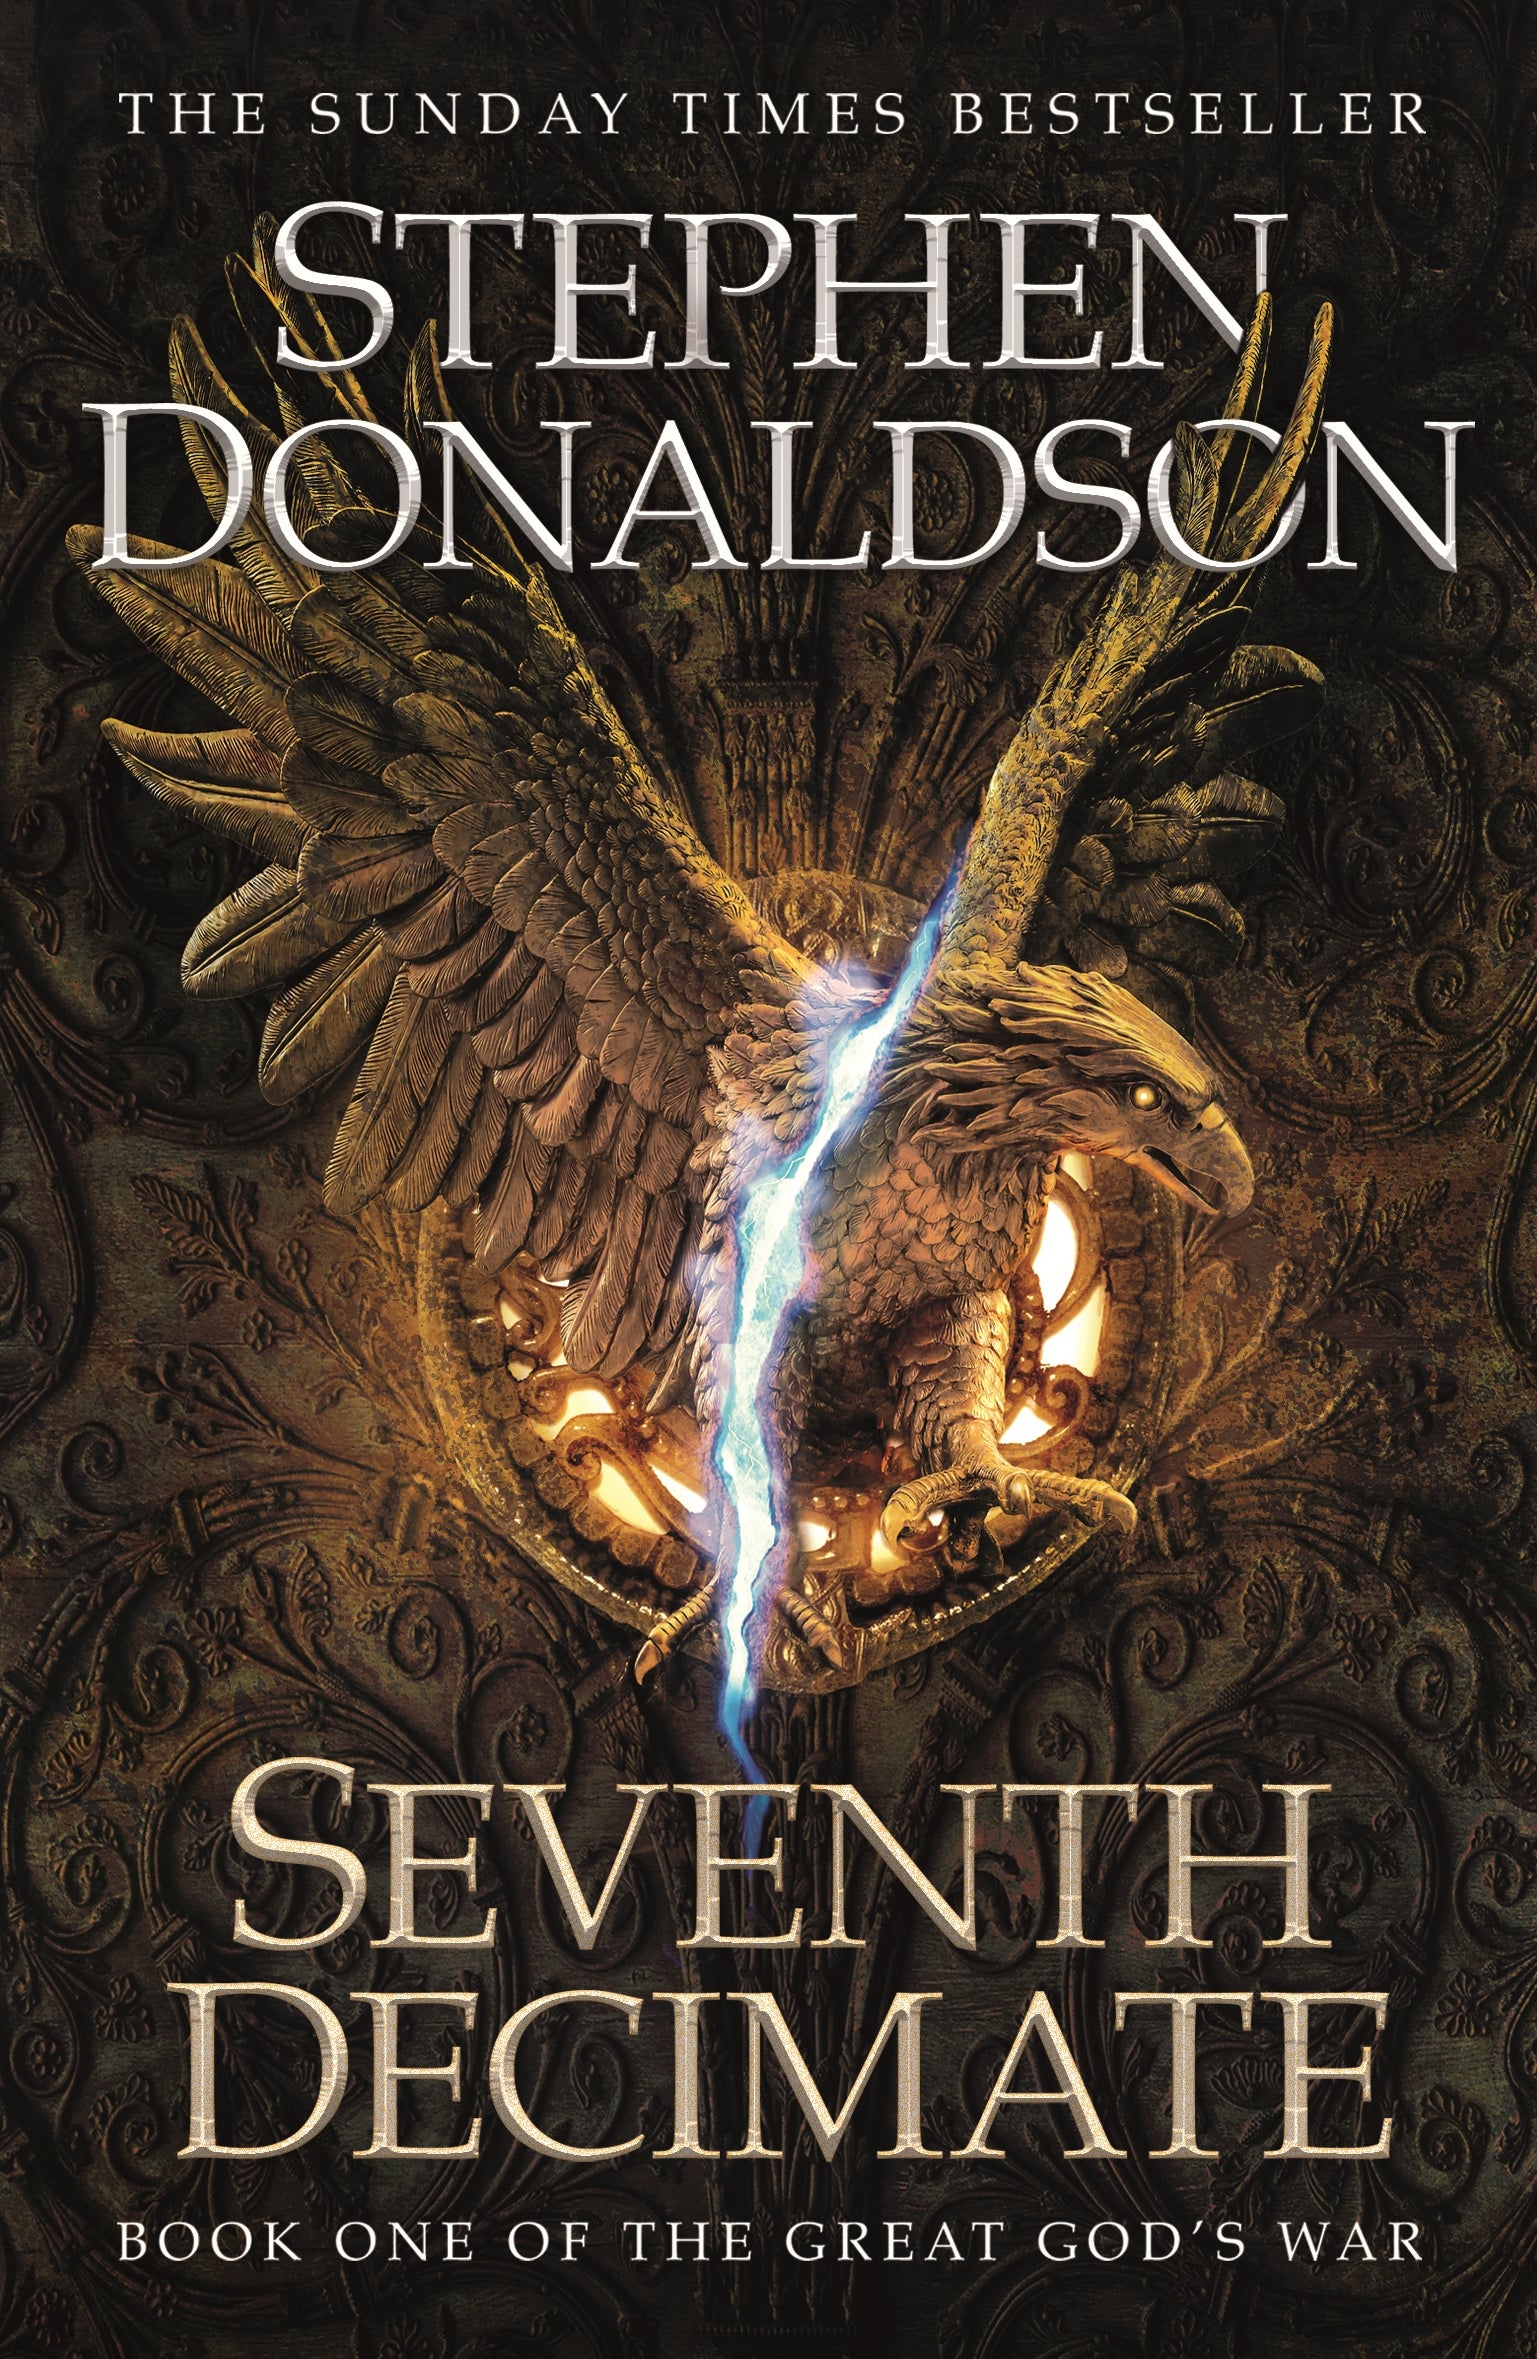 Seventh Decimate by Stephen Donaldson